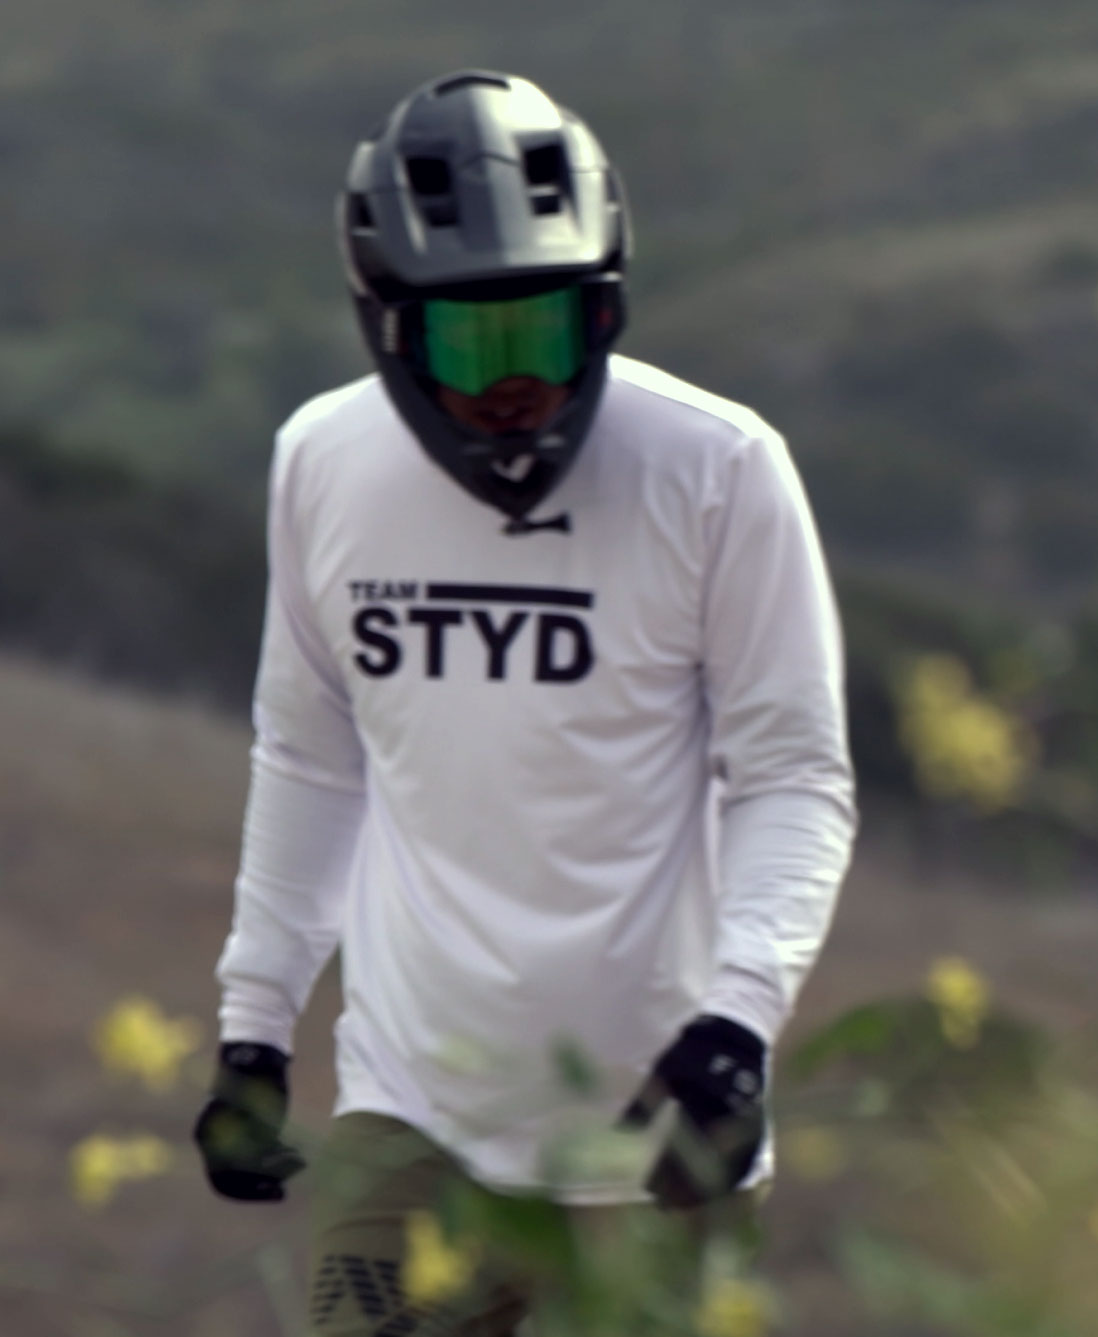 Team STYD Long Sleeve Jersey White or Black 2022